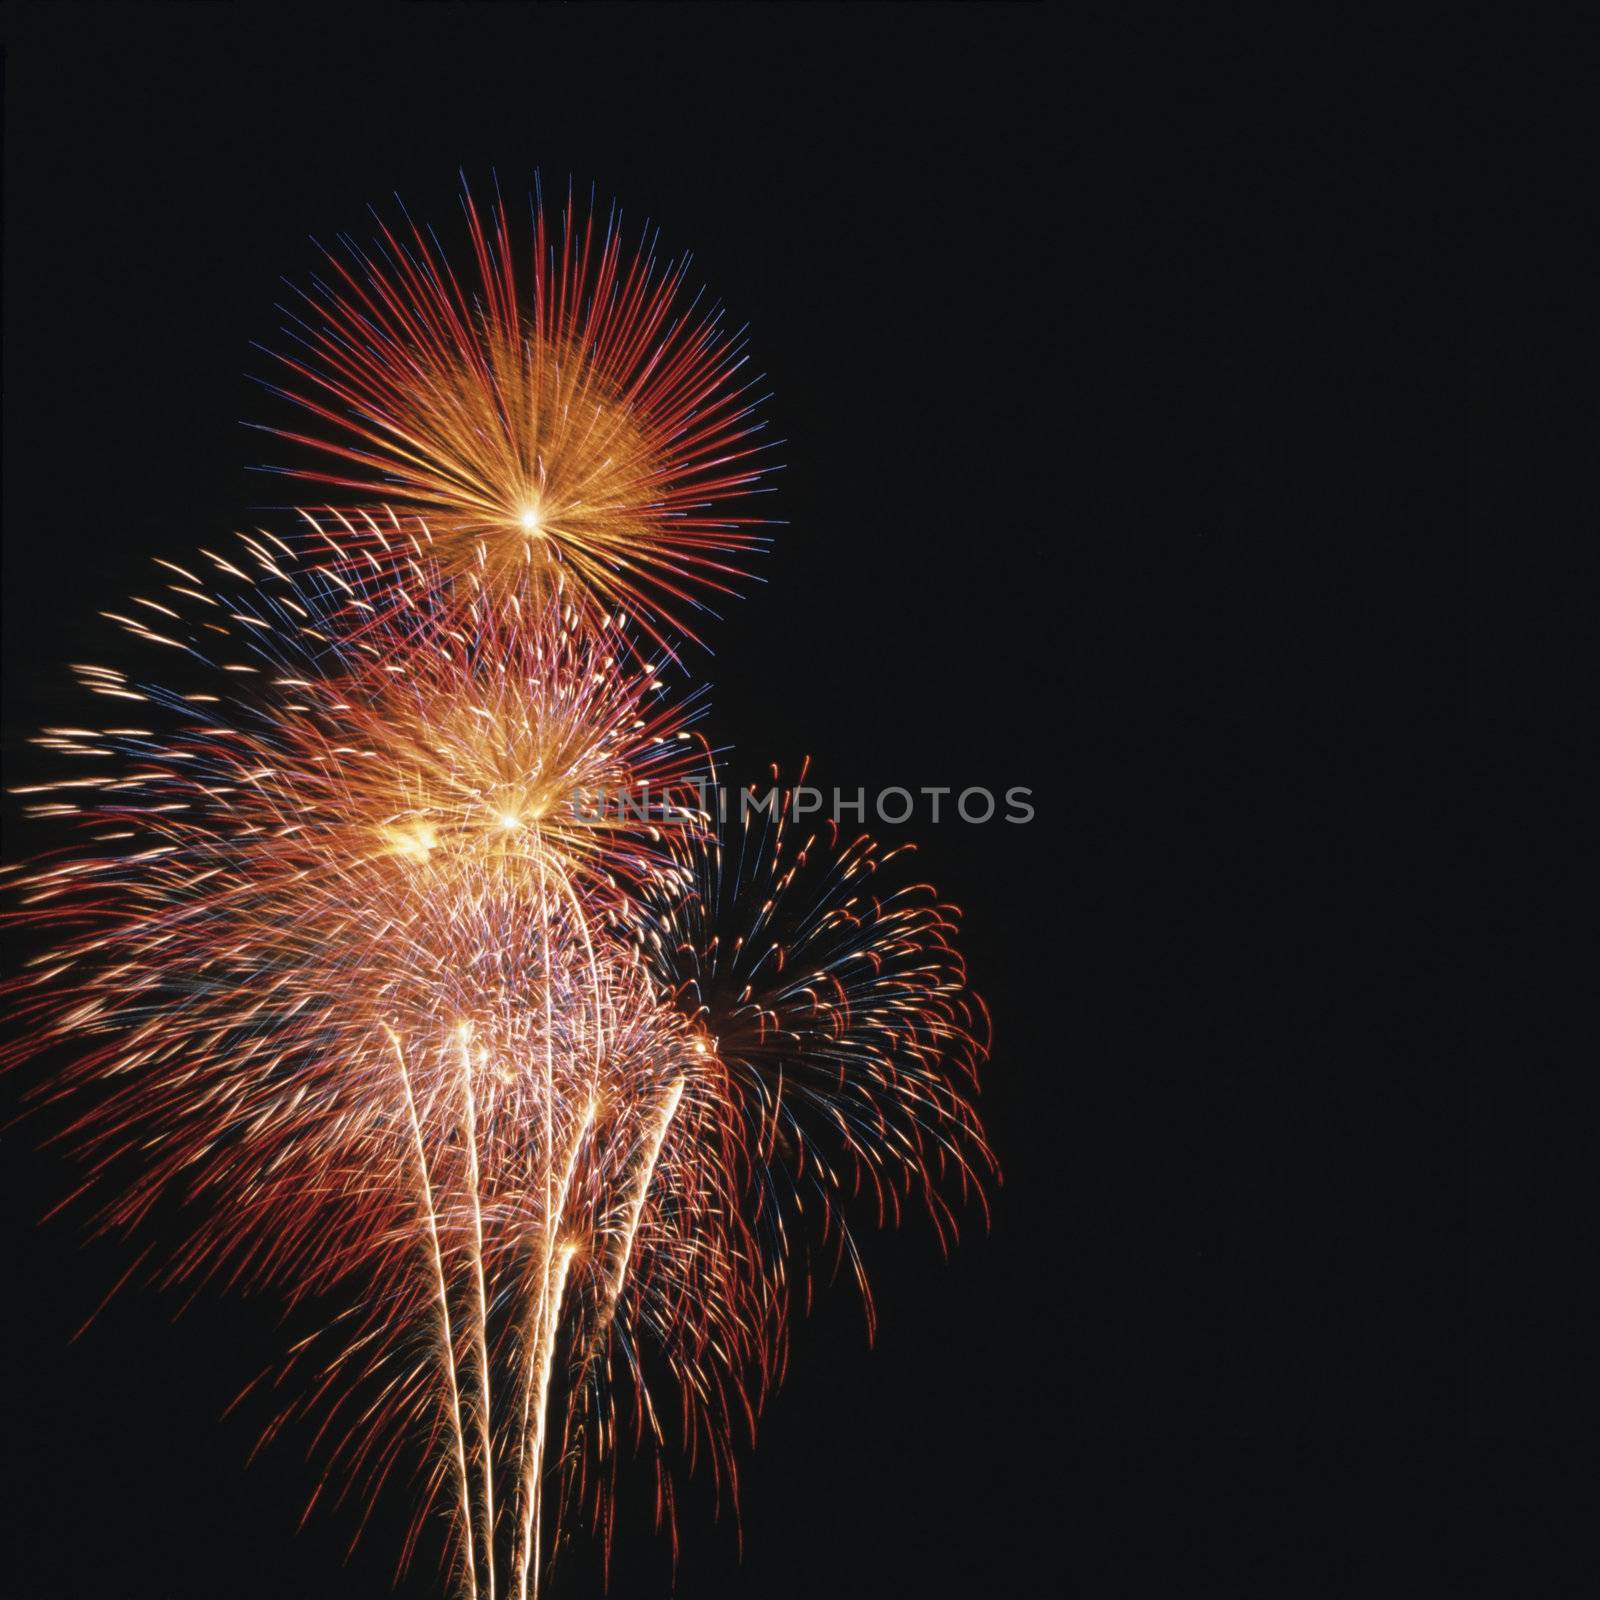 Fireworks display by edbockstock